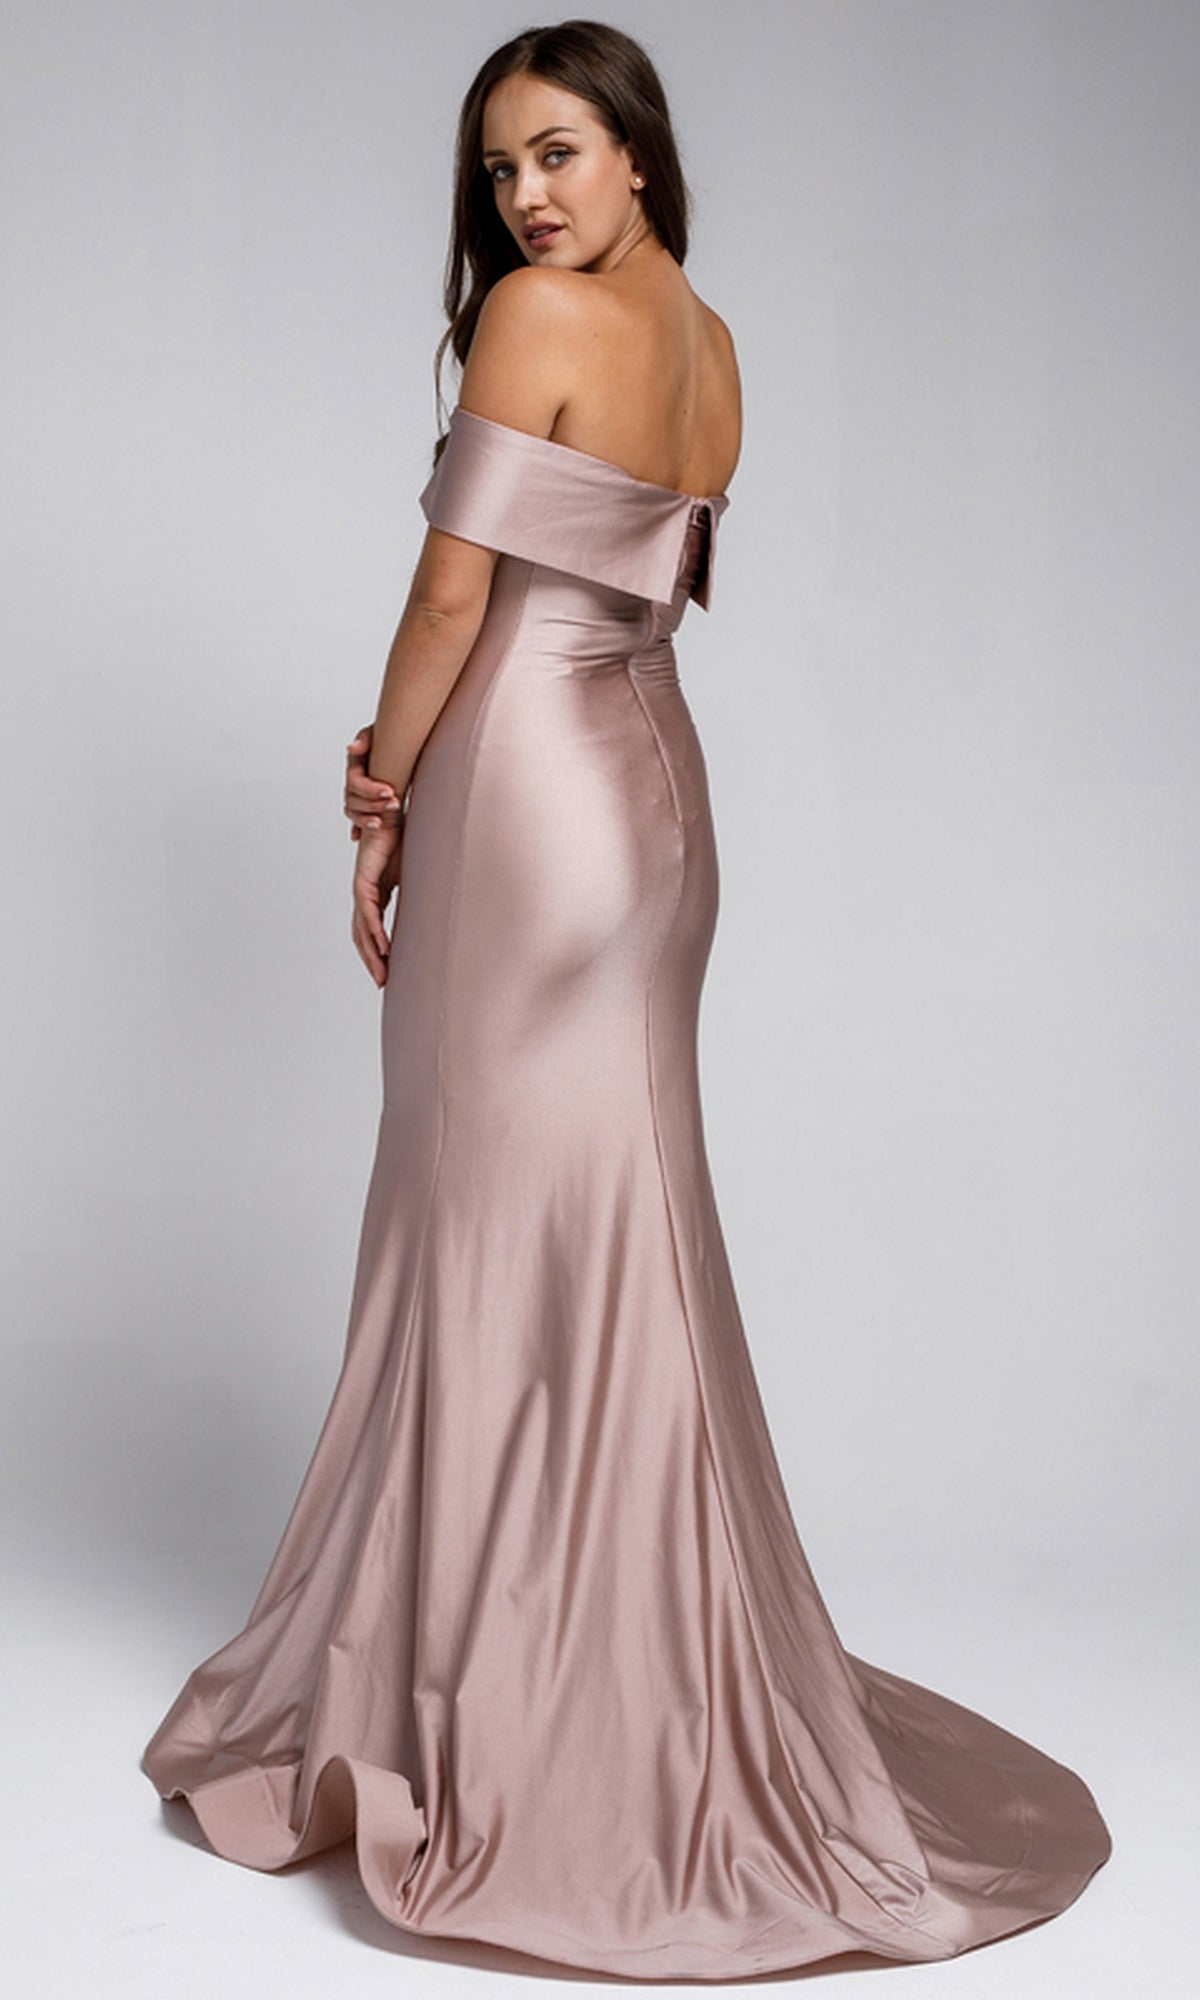 Sleek Simple Off-the-Shoulder Long Prom Dress 373